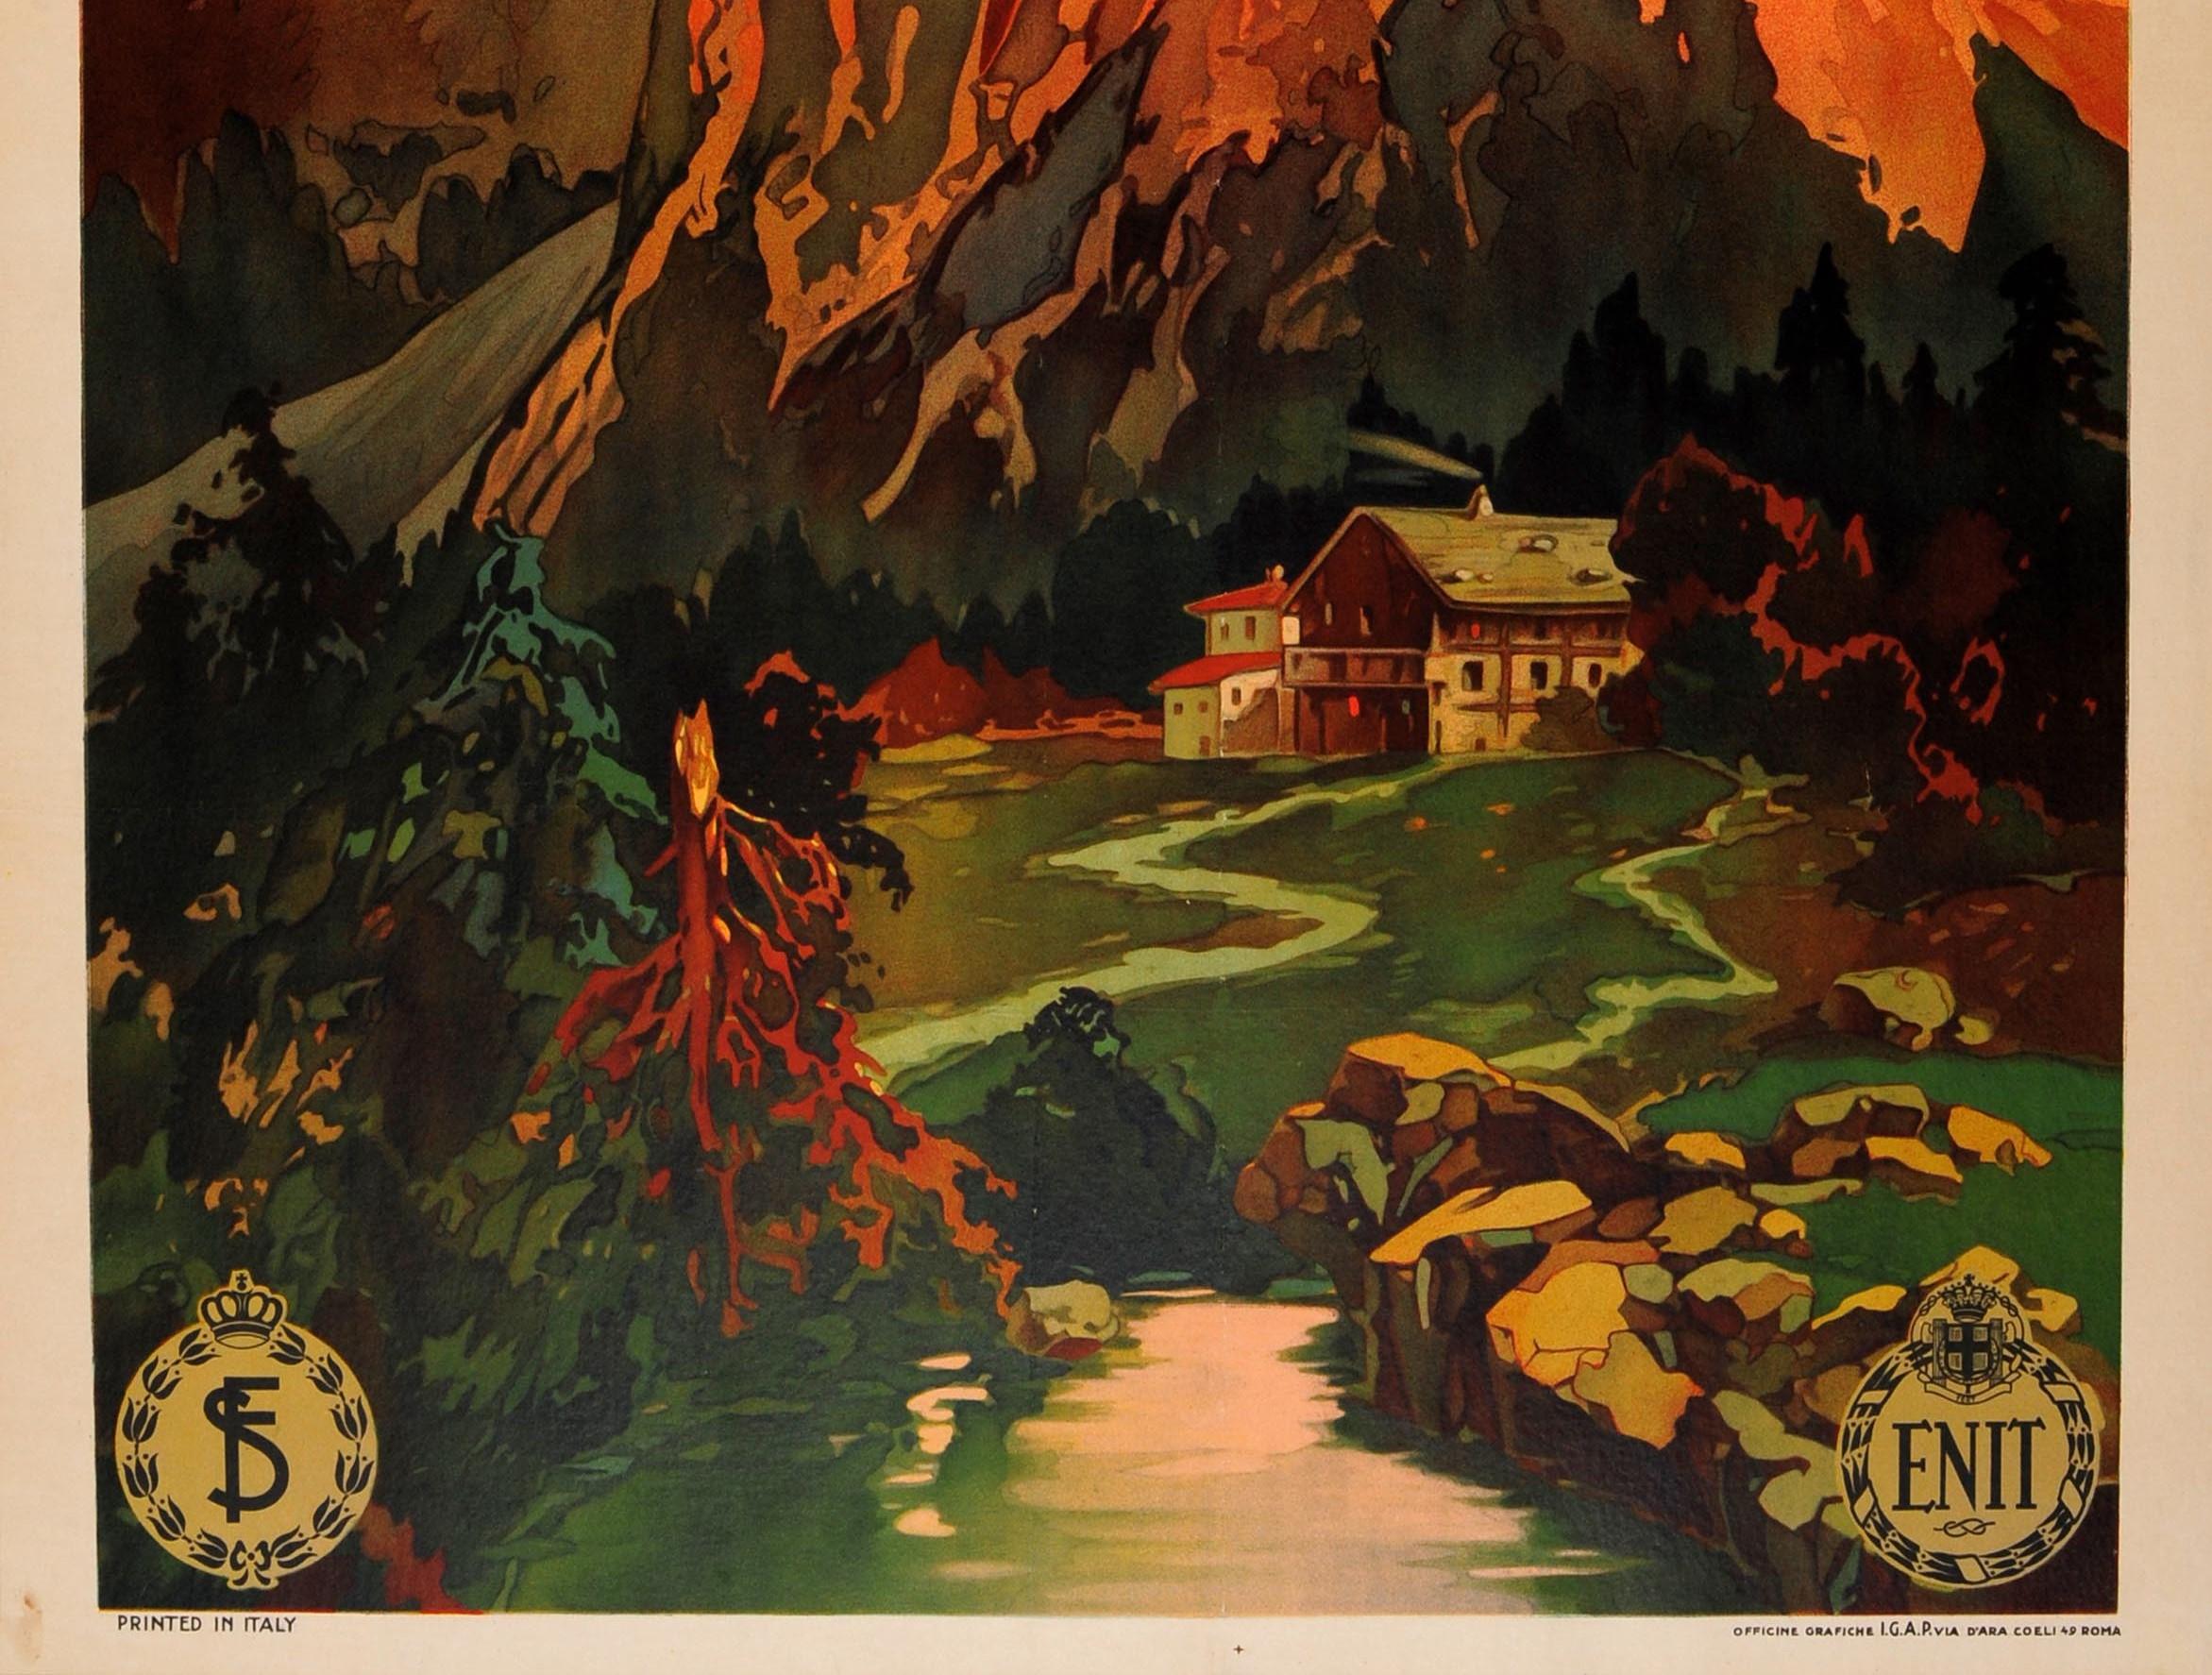 Italian Original Antique Poster Tridentine Venetia Dolomites Alps Mountains Italy Travel